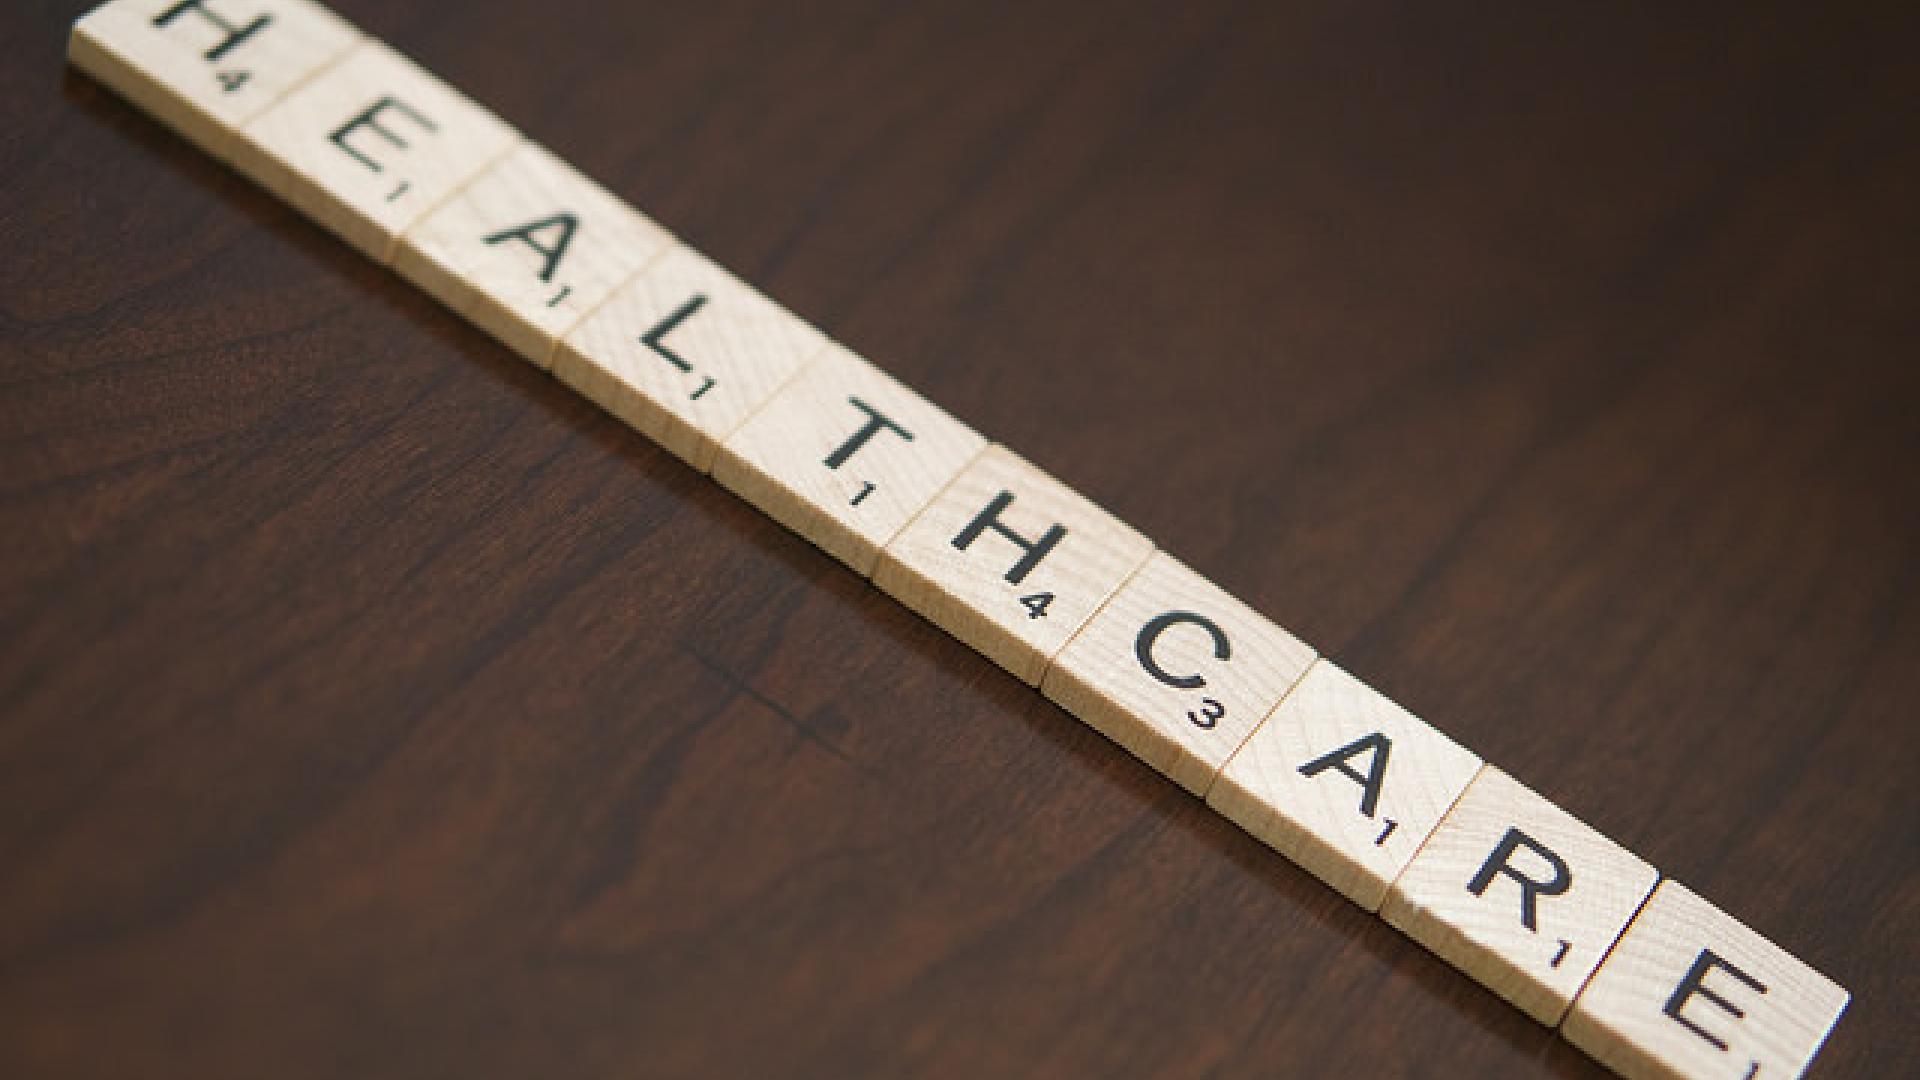 Scrabble letters read 'Healthcare'